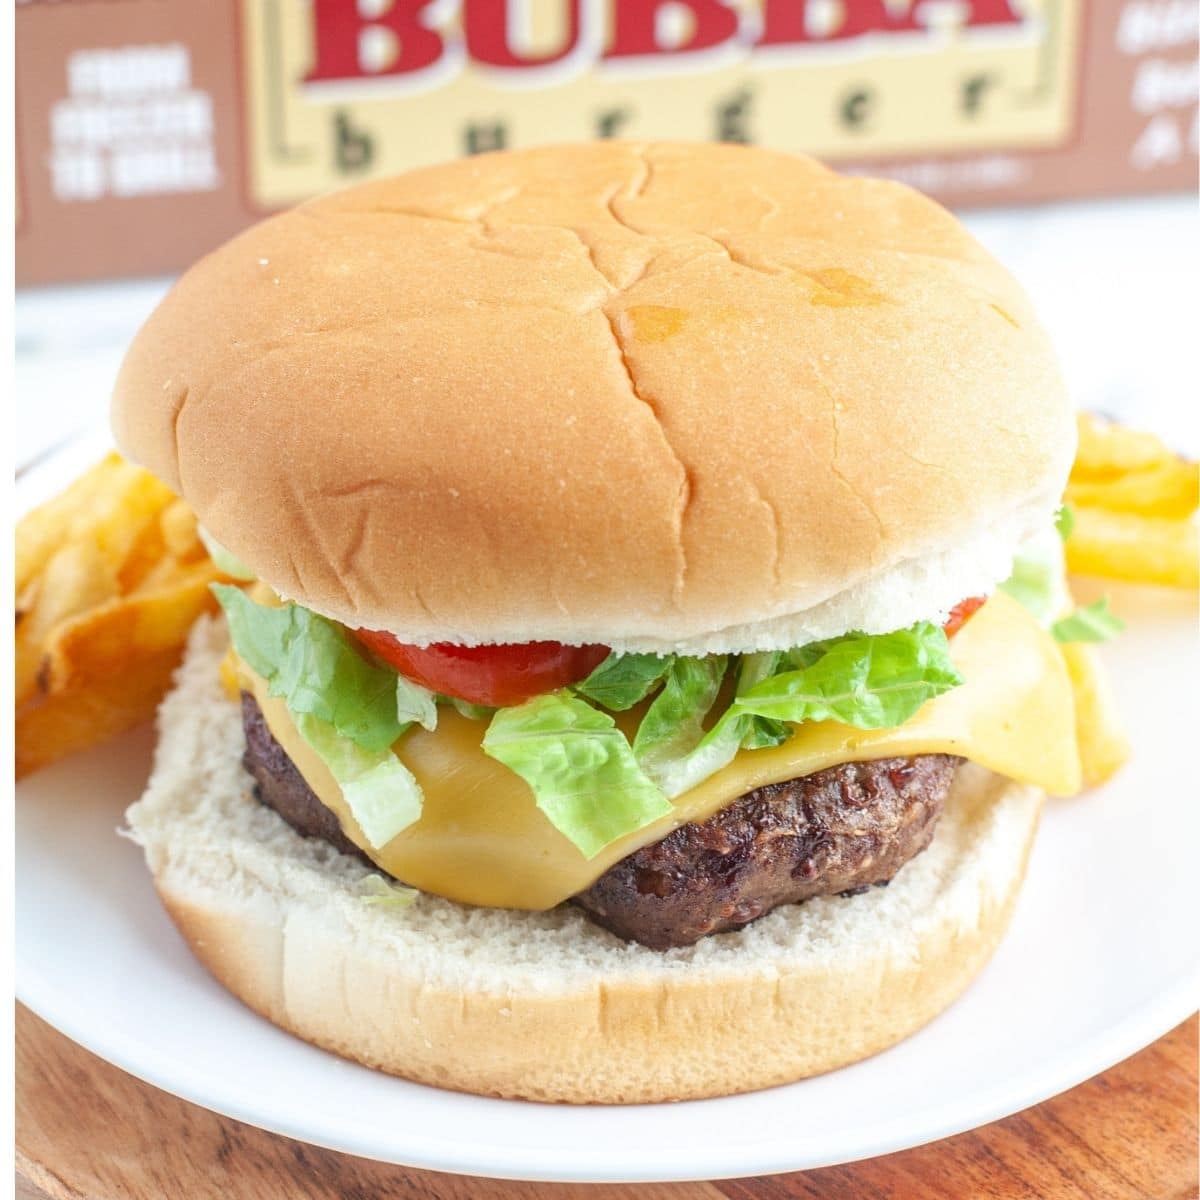 BUBBA Burger, Original Veggie Burger